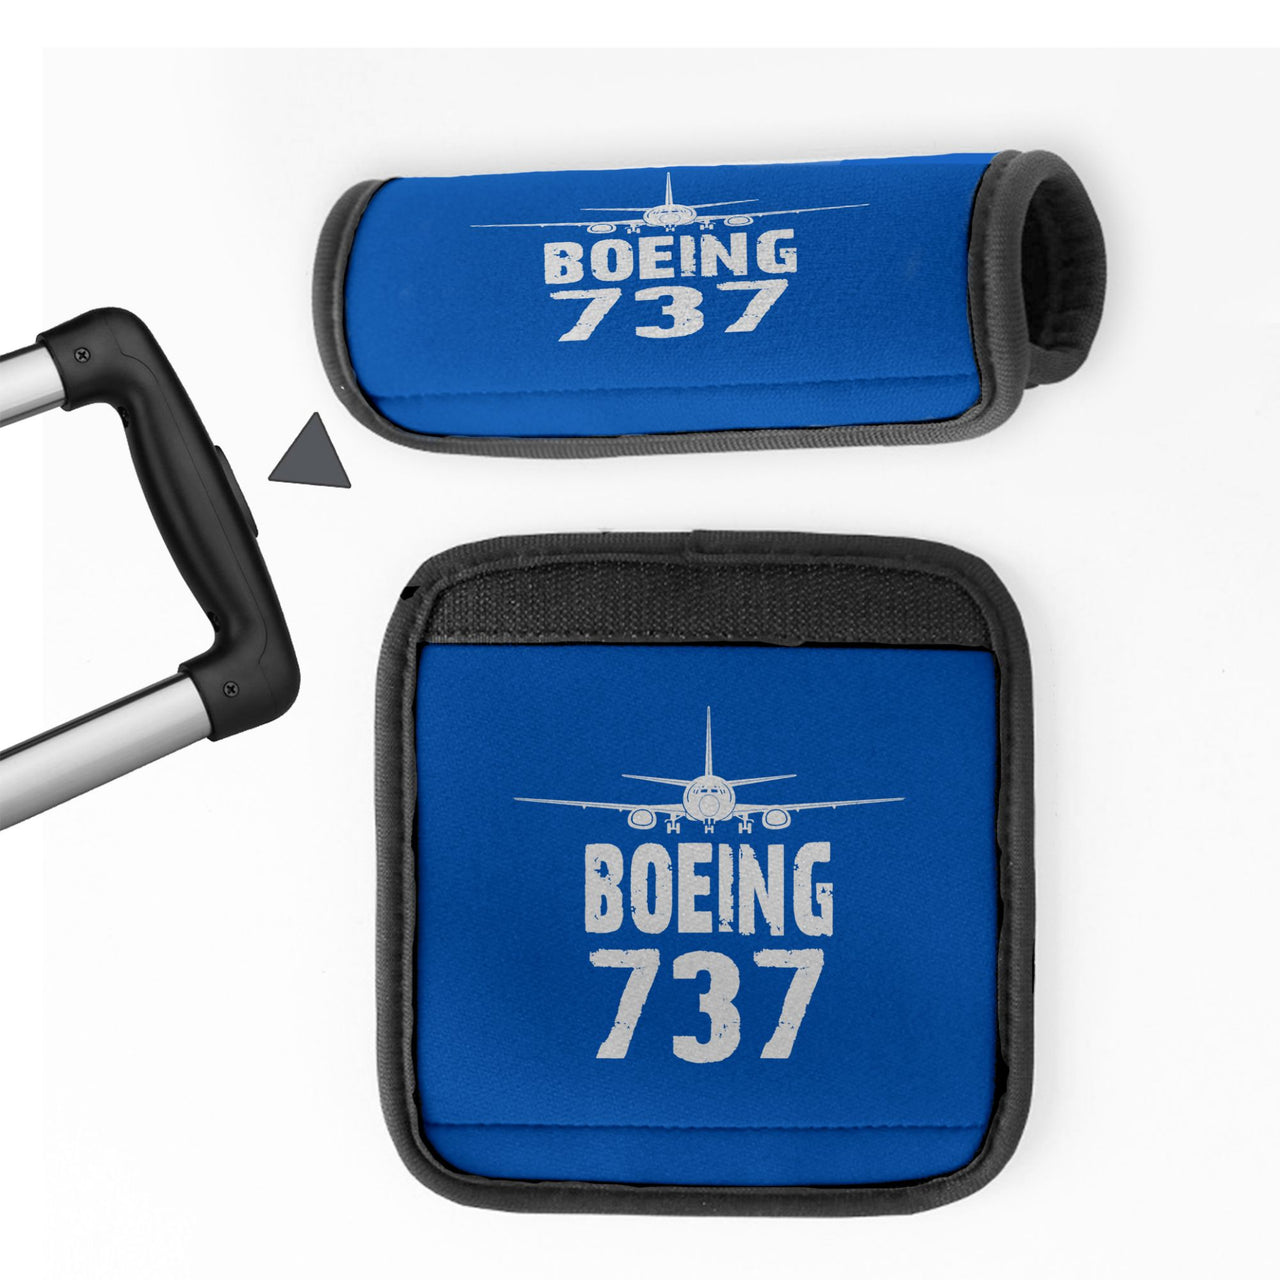 Boeing 737 & Plane Designed Neoprene Luggage Handle Covers